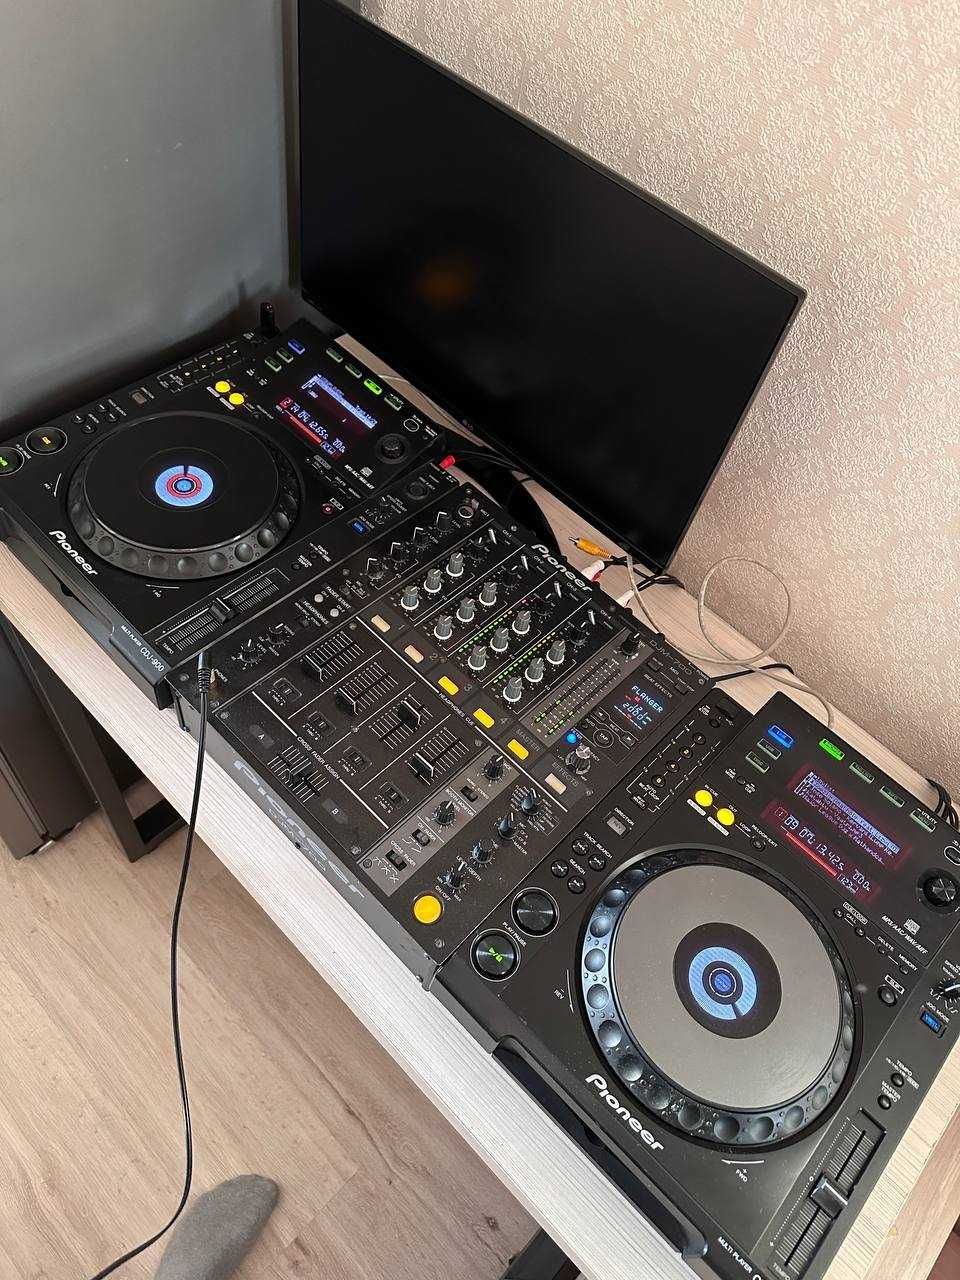 Pioneer DJ CDJ 900 и DJM 700